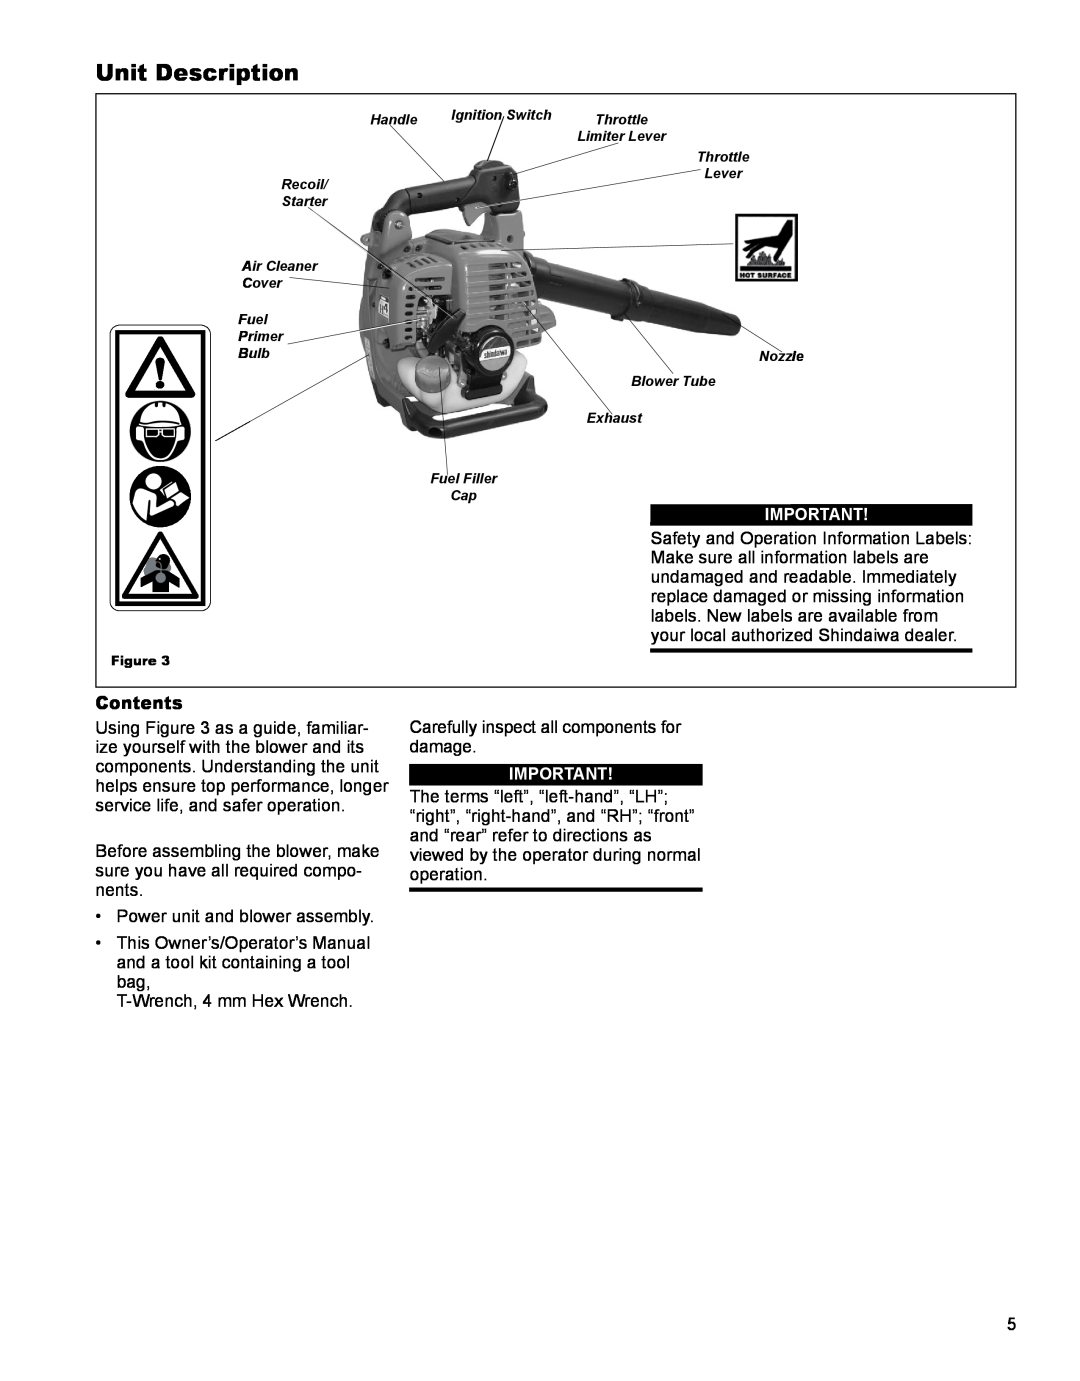 Shindaiwa EB344EF13, X7501930200 manual Unit Description, Contents 